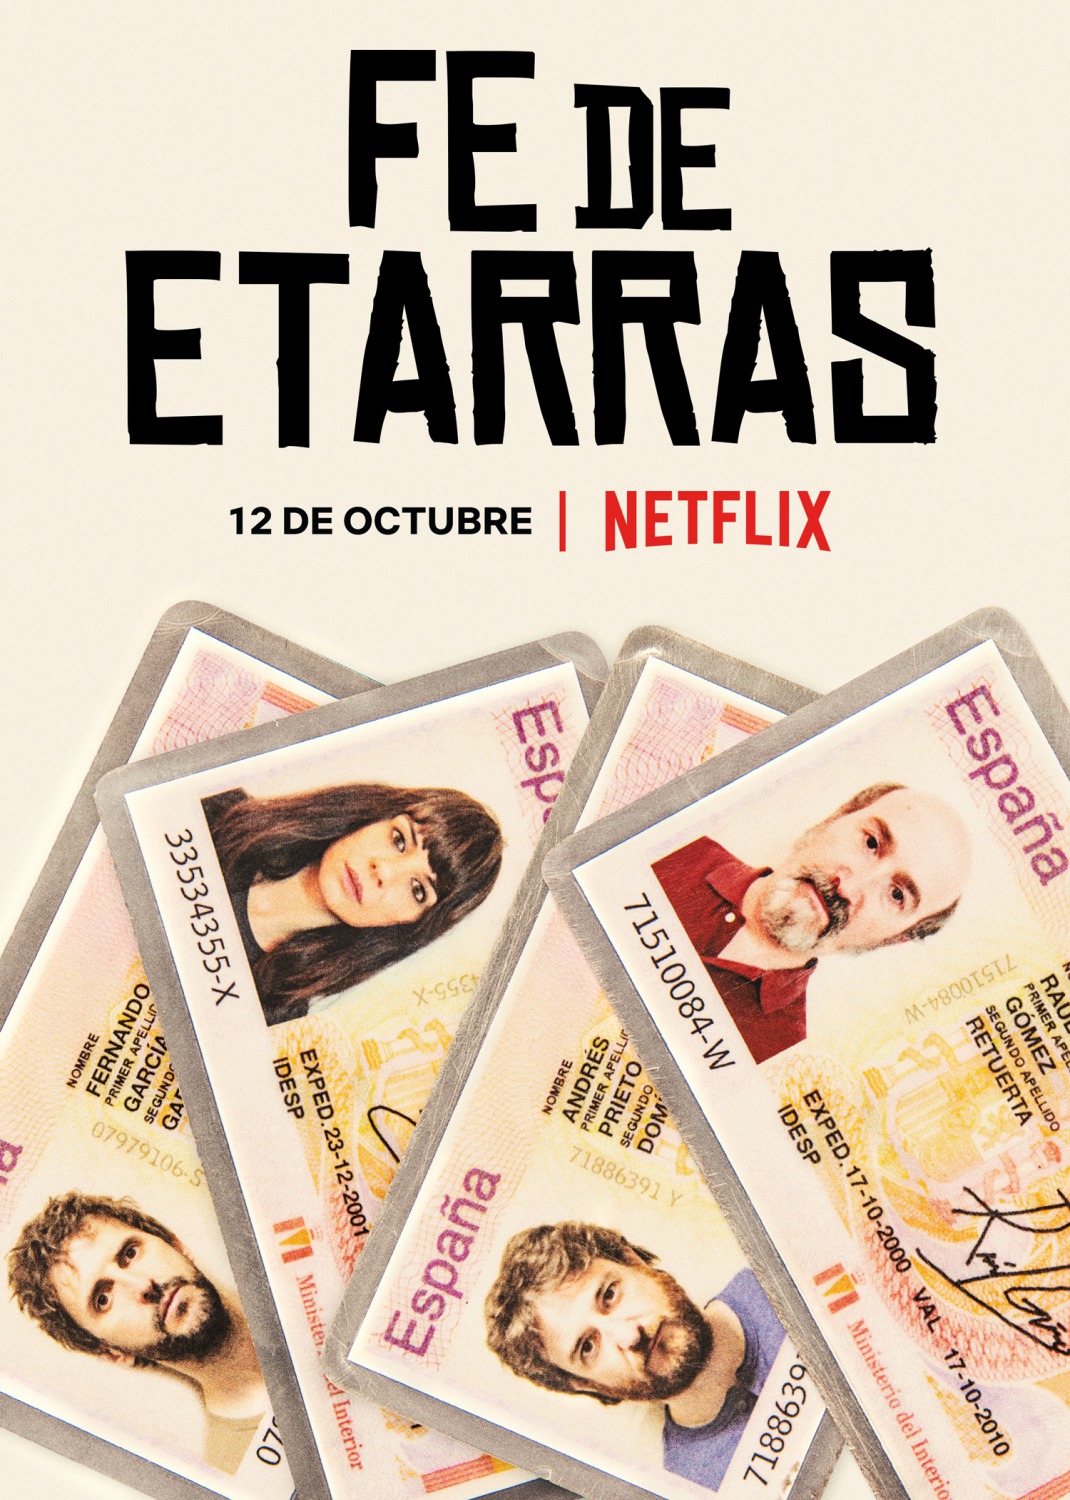 Extra Large TV Poster Image for Fe de etarras (#1 of 2)